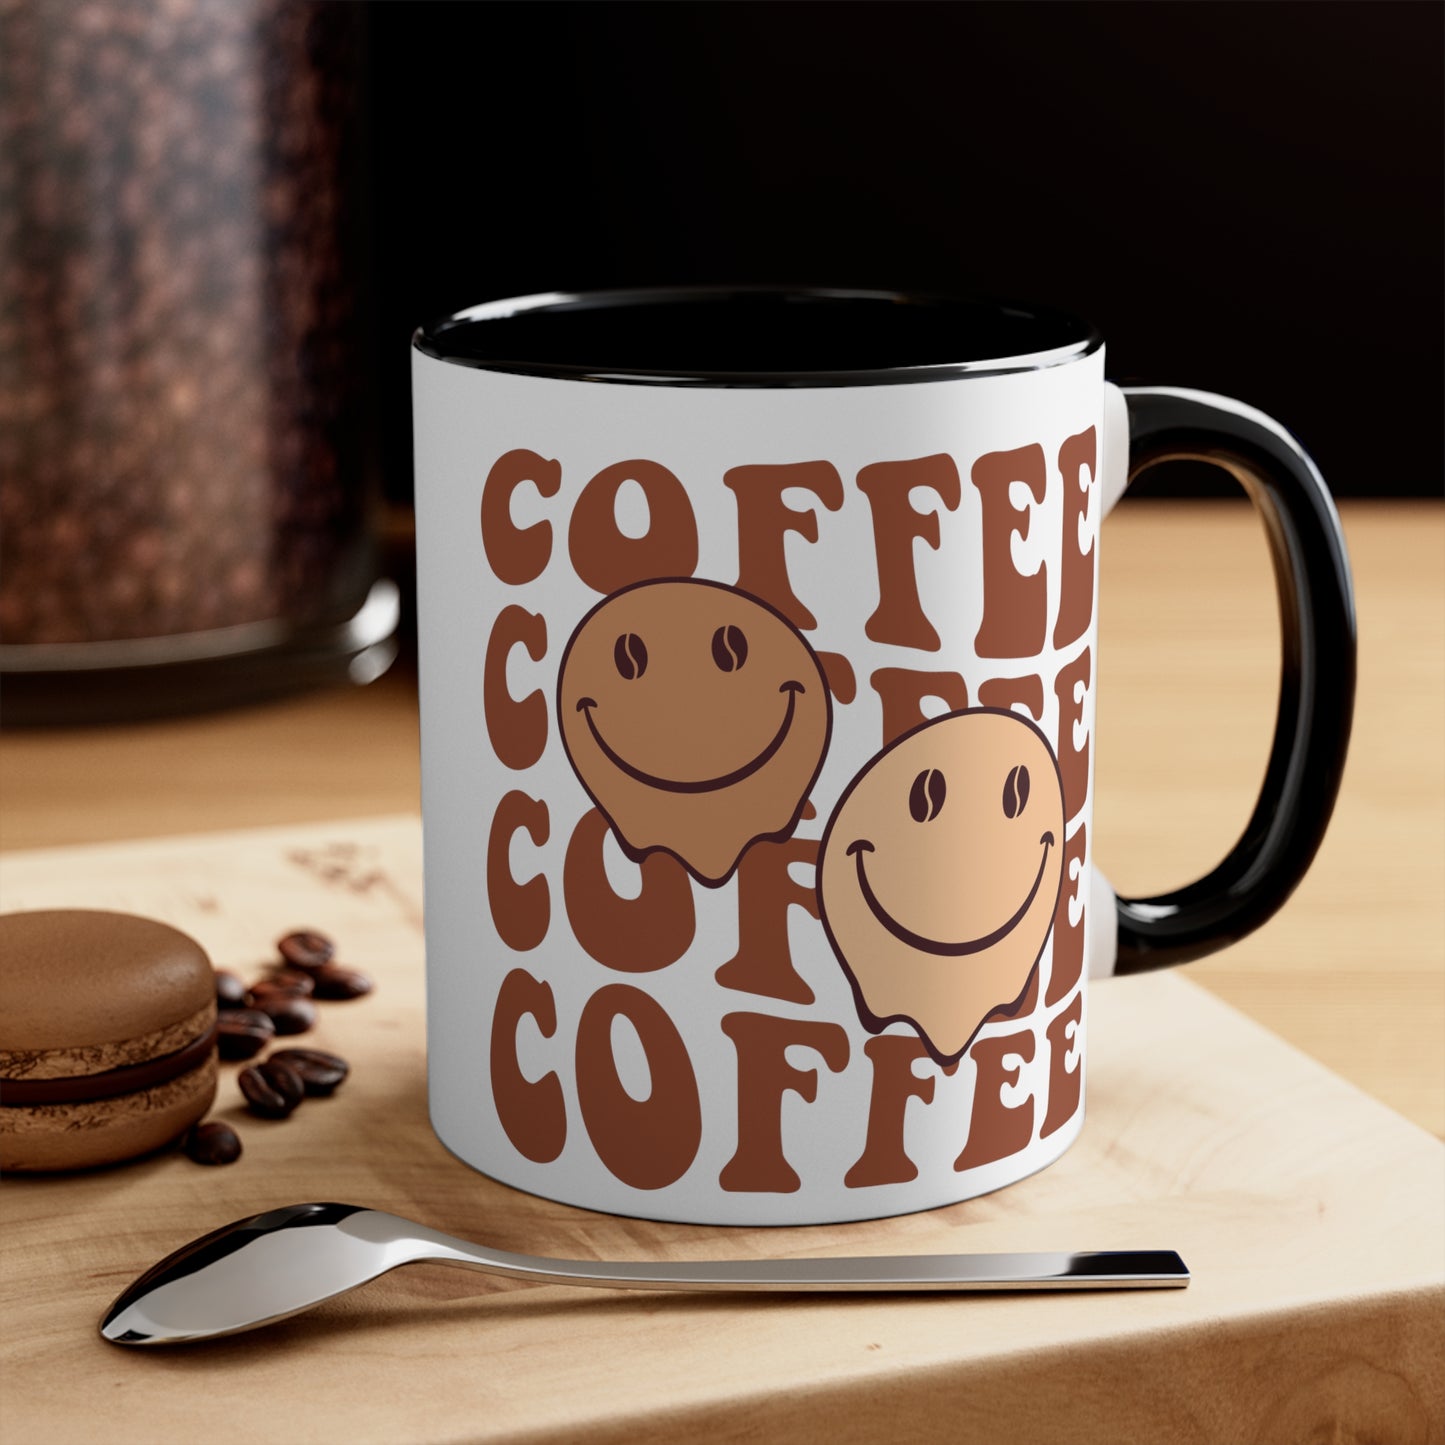 Cute Coffee Mug, Happy Face Funny Ceramic Mug Cup 11oz